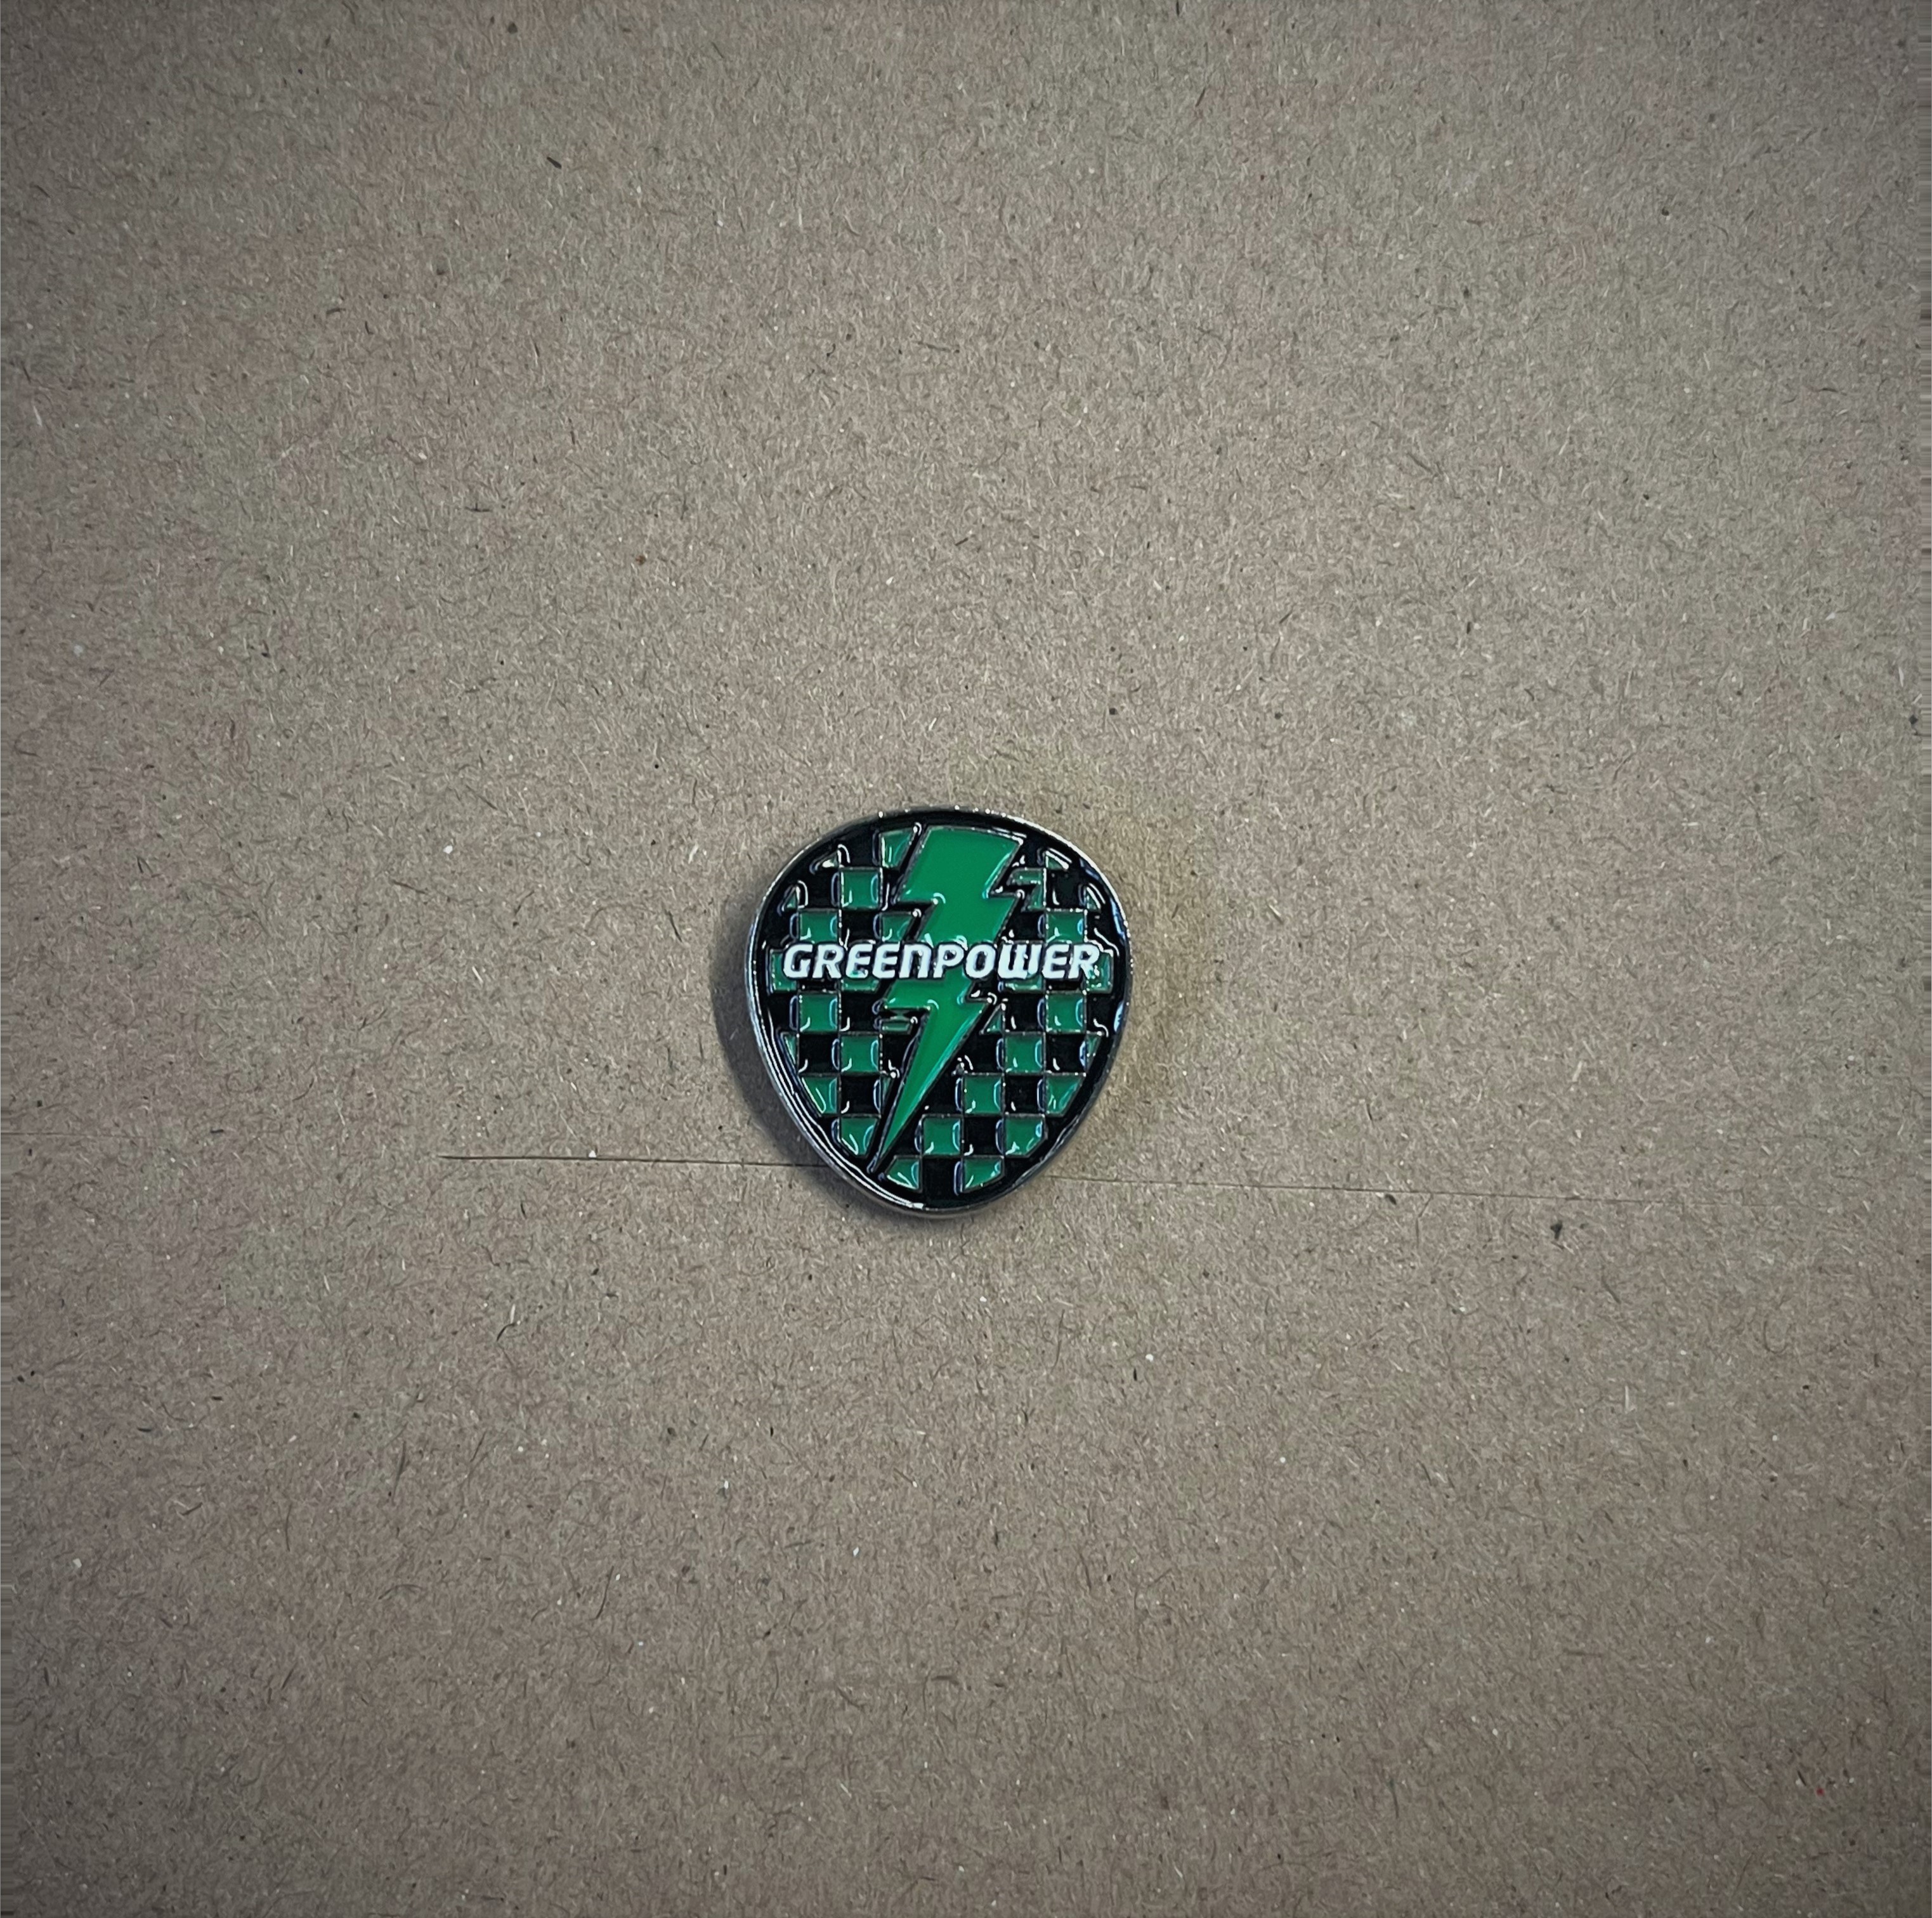 Greenpower Enamel Pin Badge